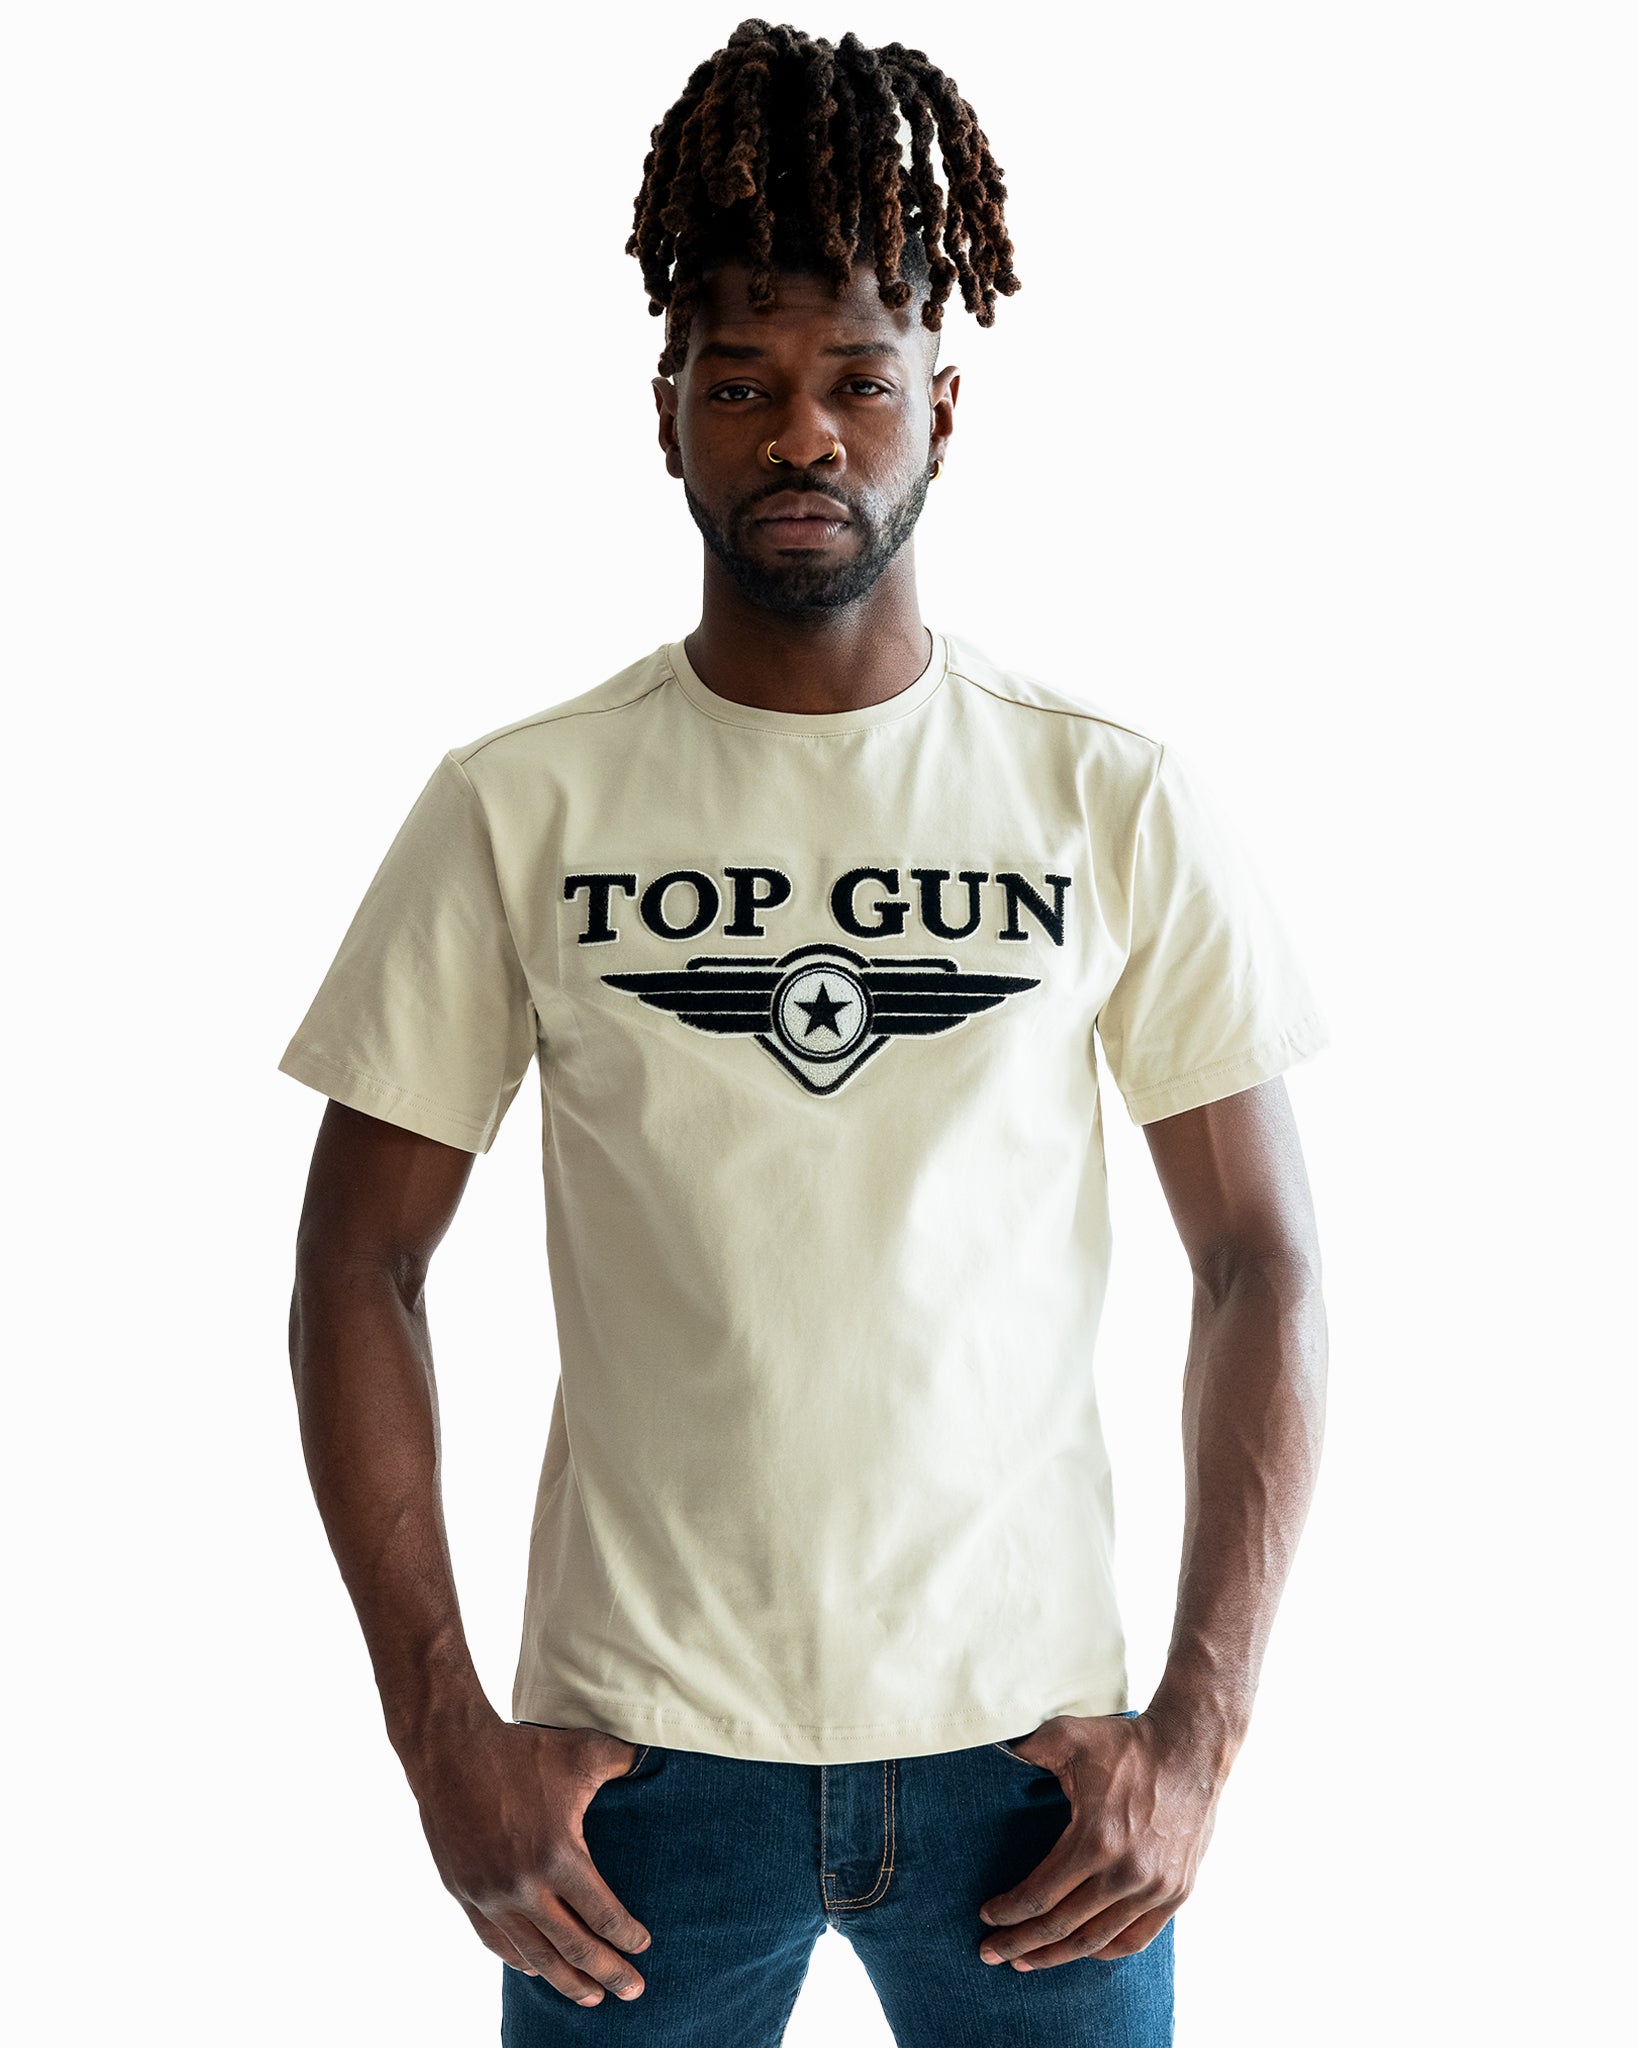 TOP GUN® EMBROIDERED LOGO TEE | TOP GUN Clothing | TOP GUN Original T-shirts  – Top Gun Store